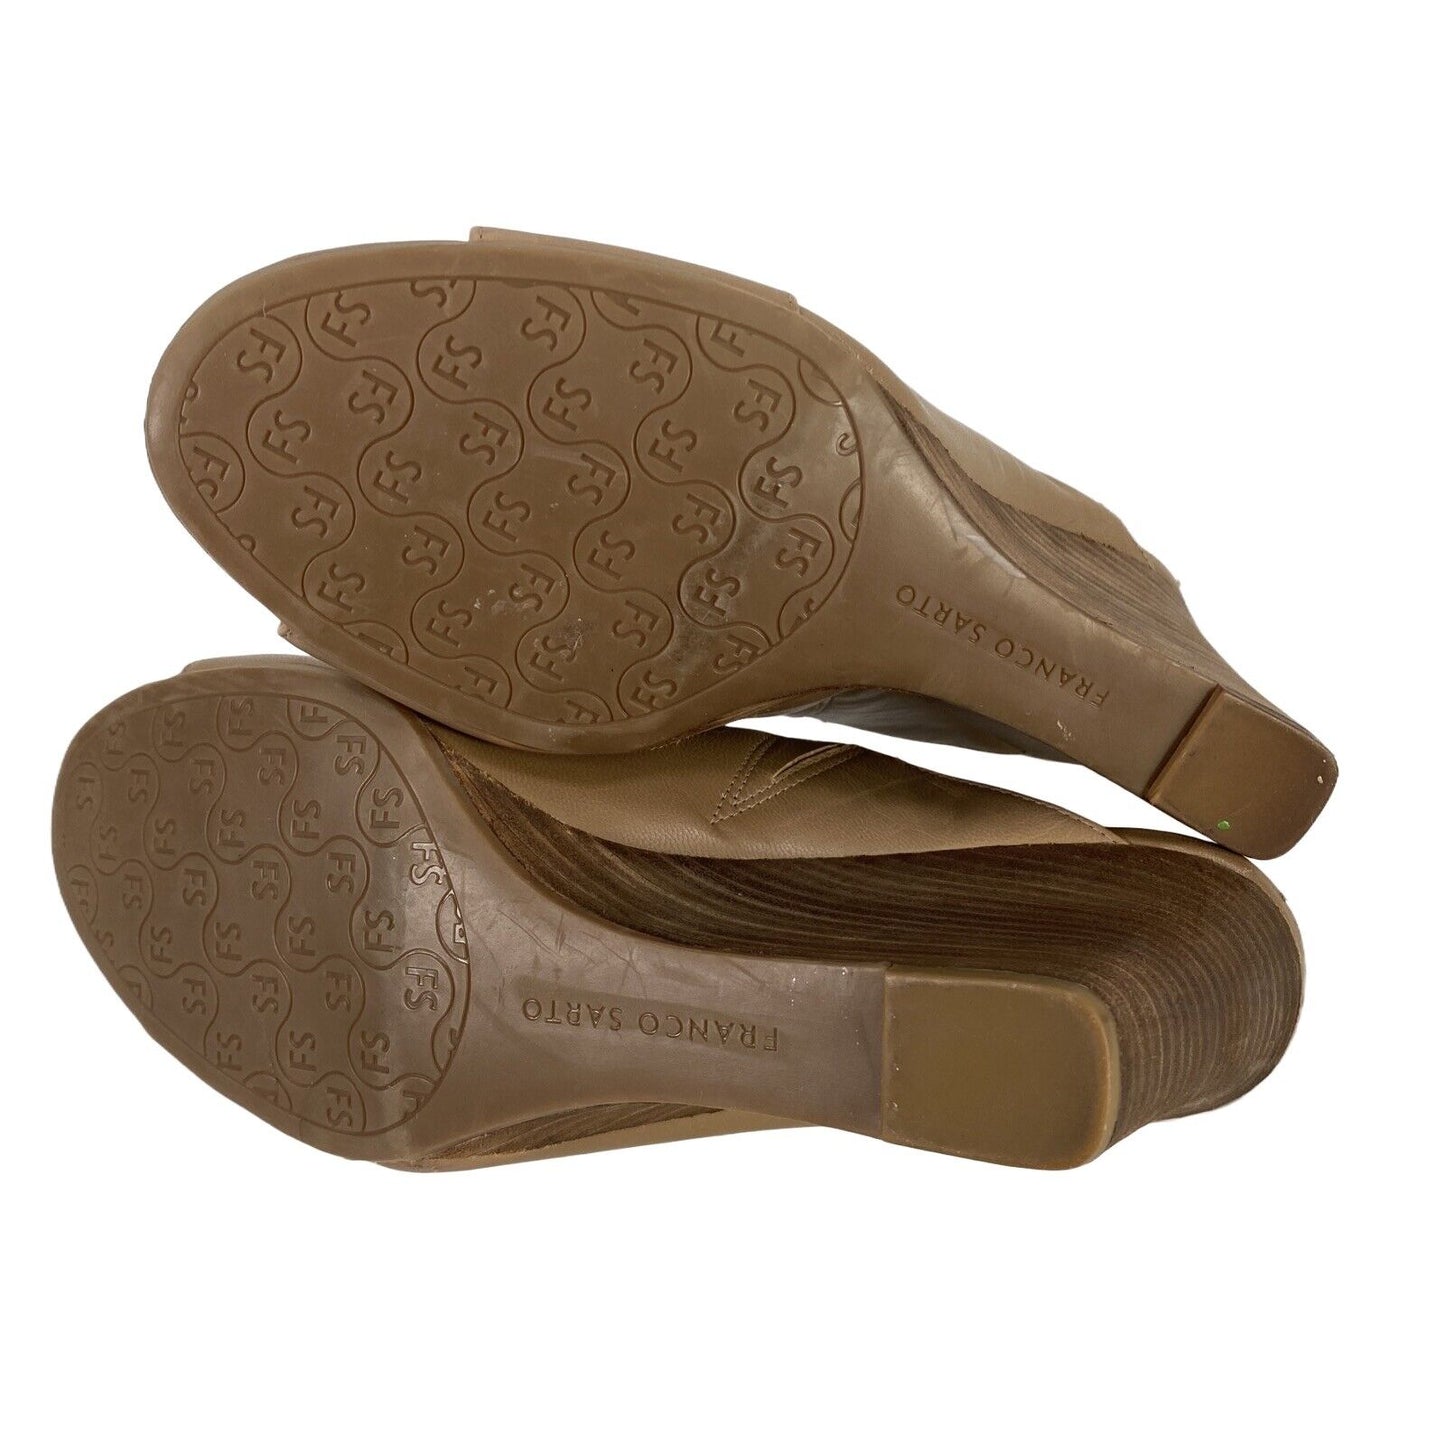 Franco Sarto Women's Beige Leather Open Toe Wedge Sandals - 11 M